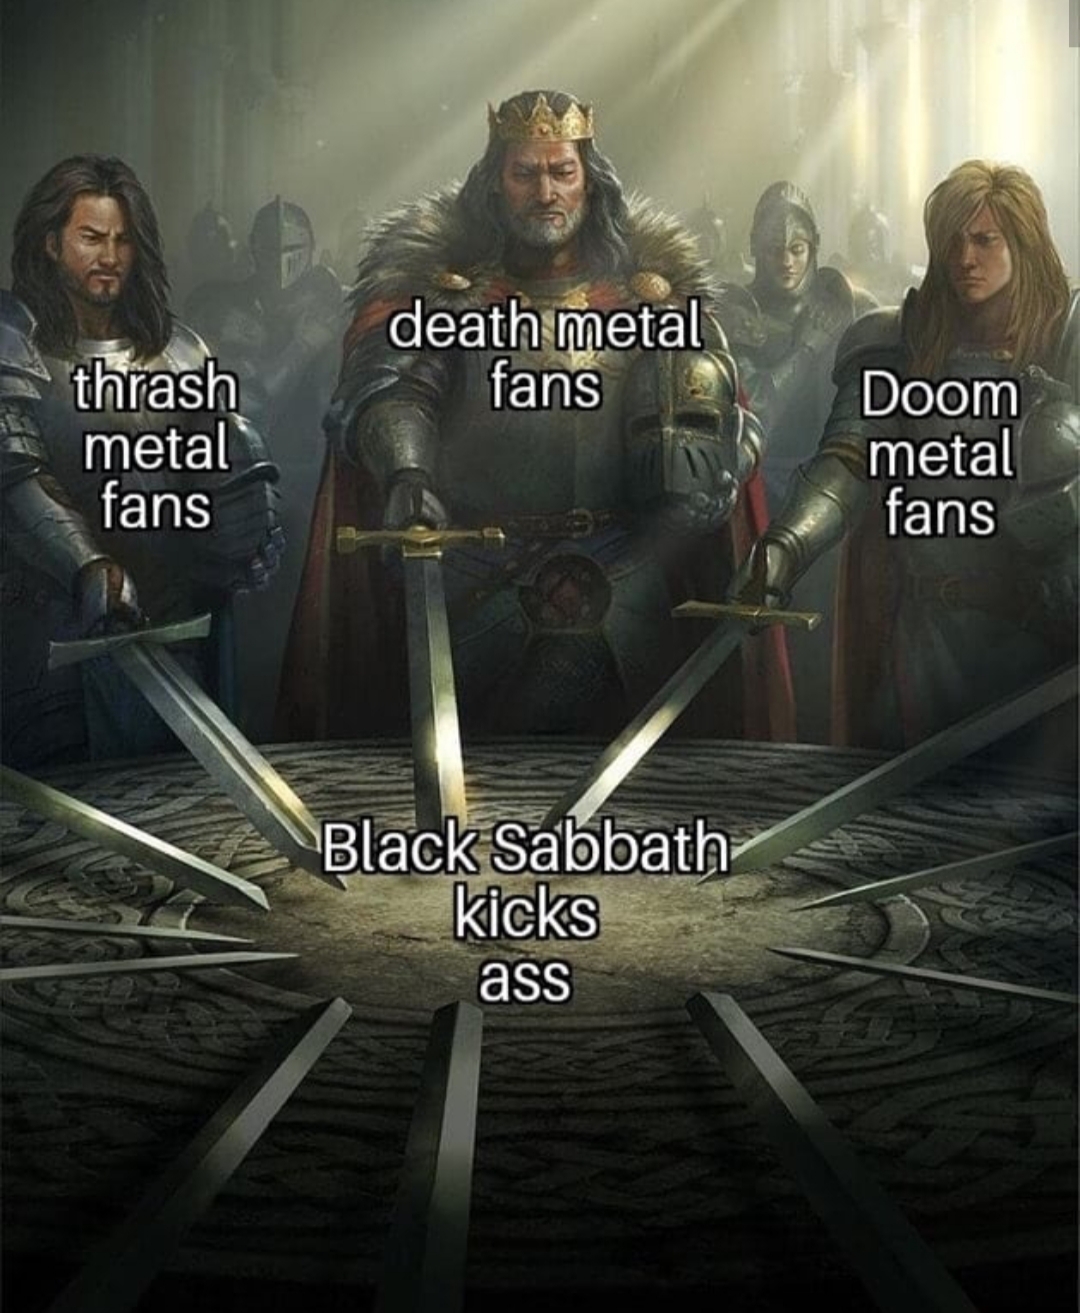 rdr2 memes arthur - death metal fans thrash metal fans Doom metal fans Black Sabbath kicks ass